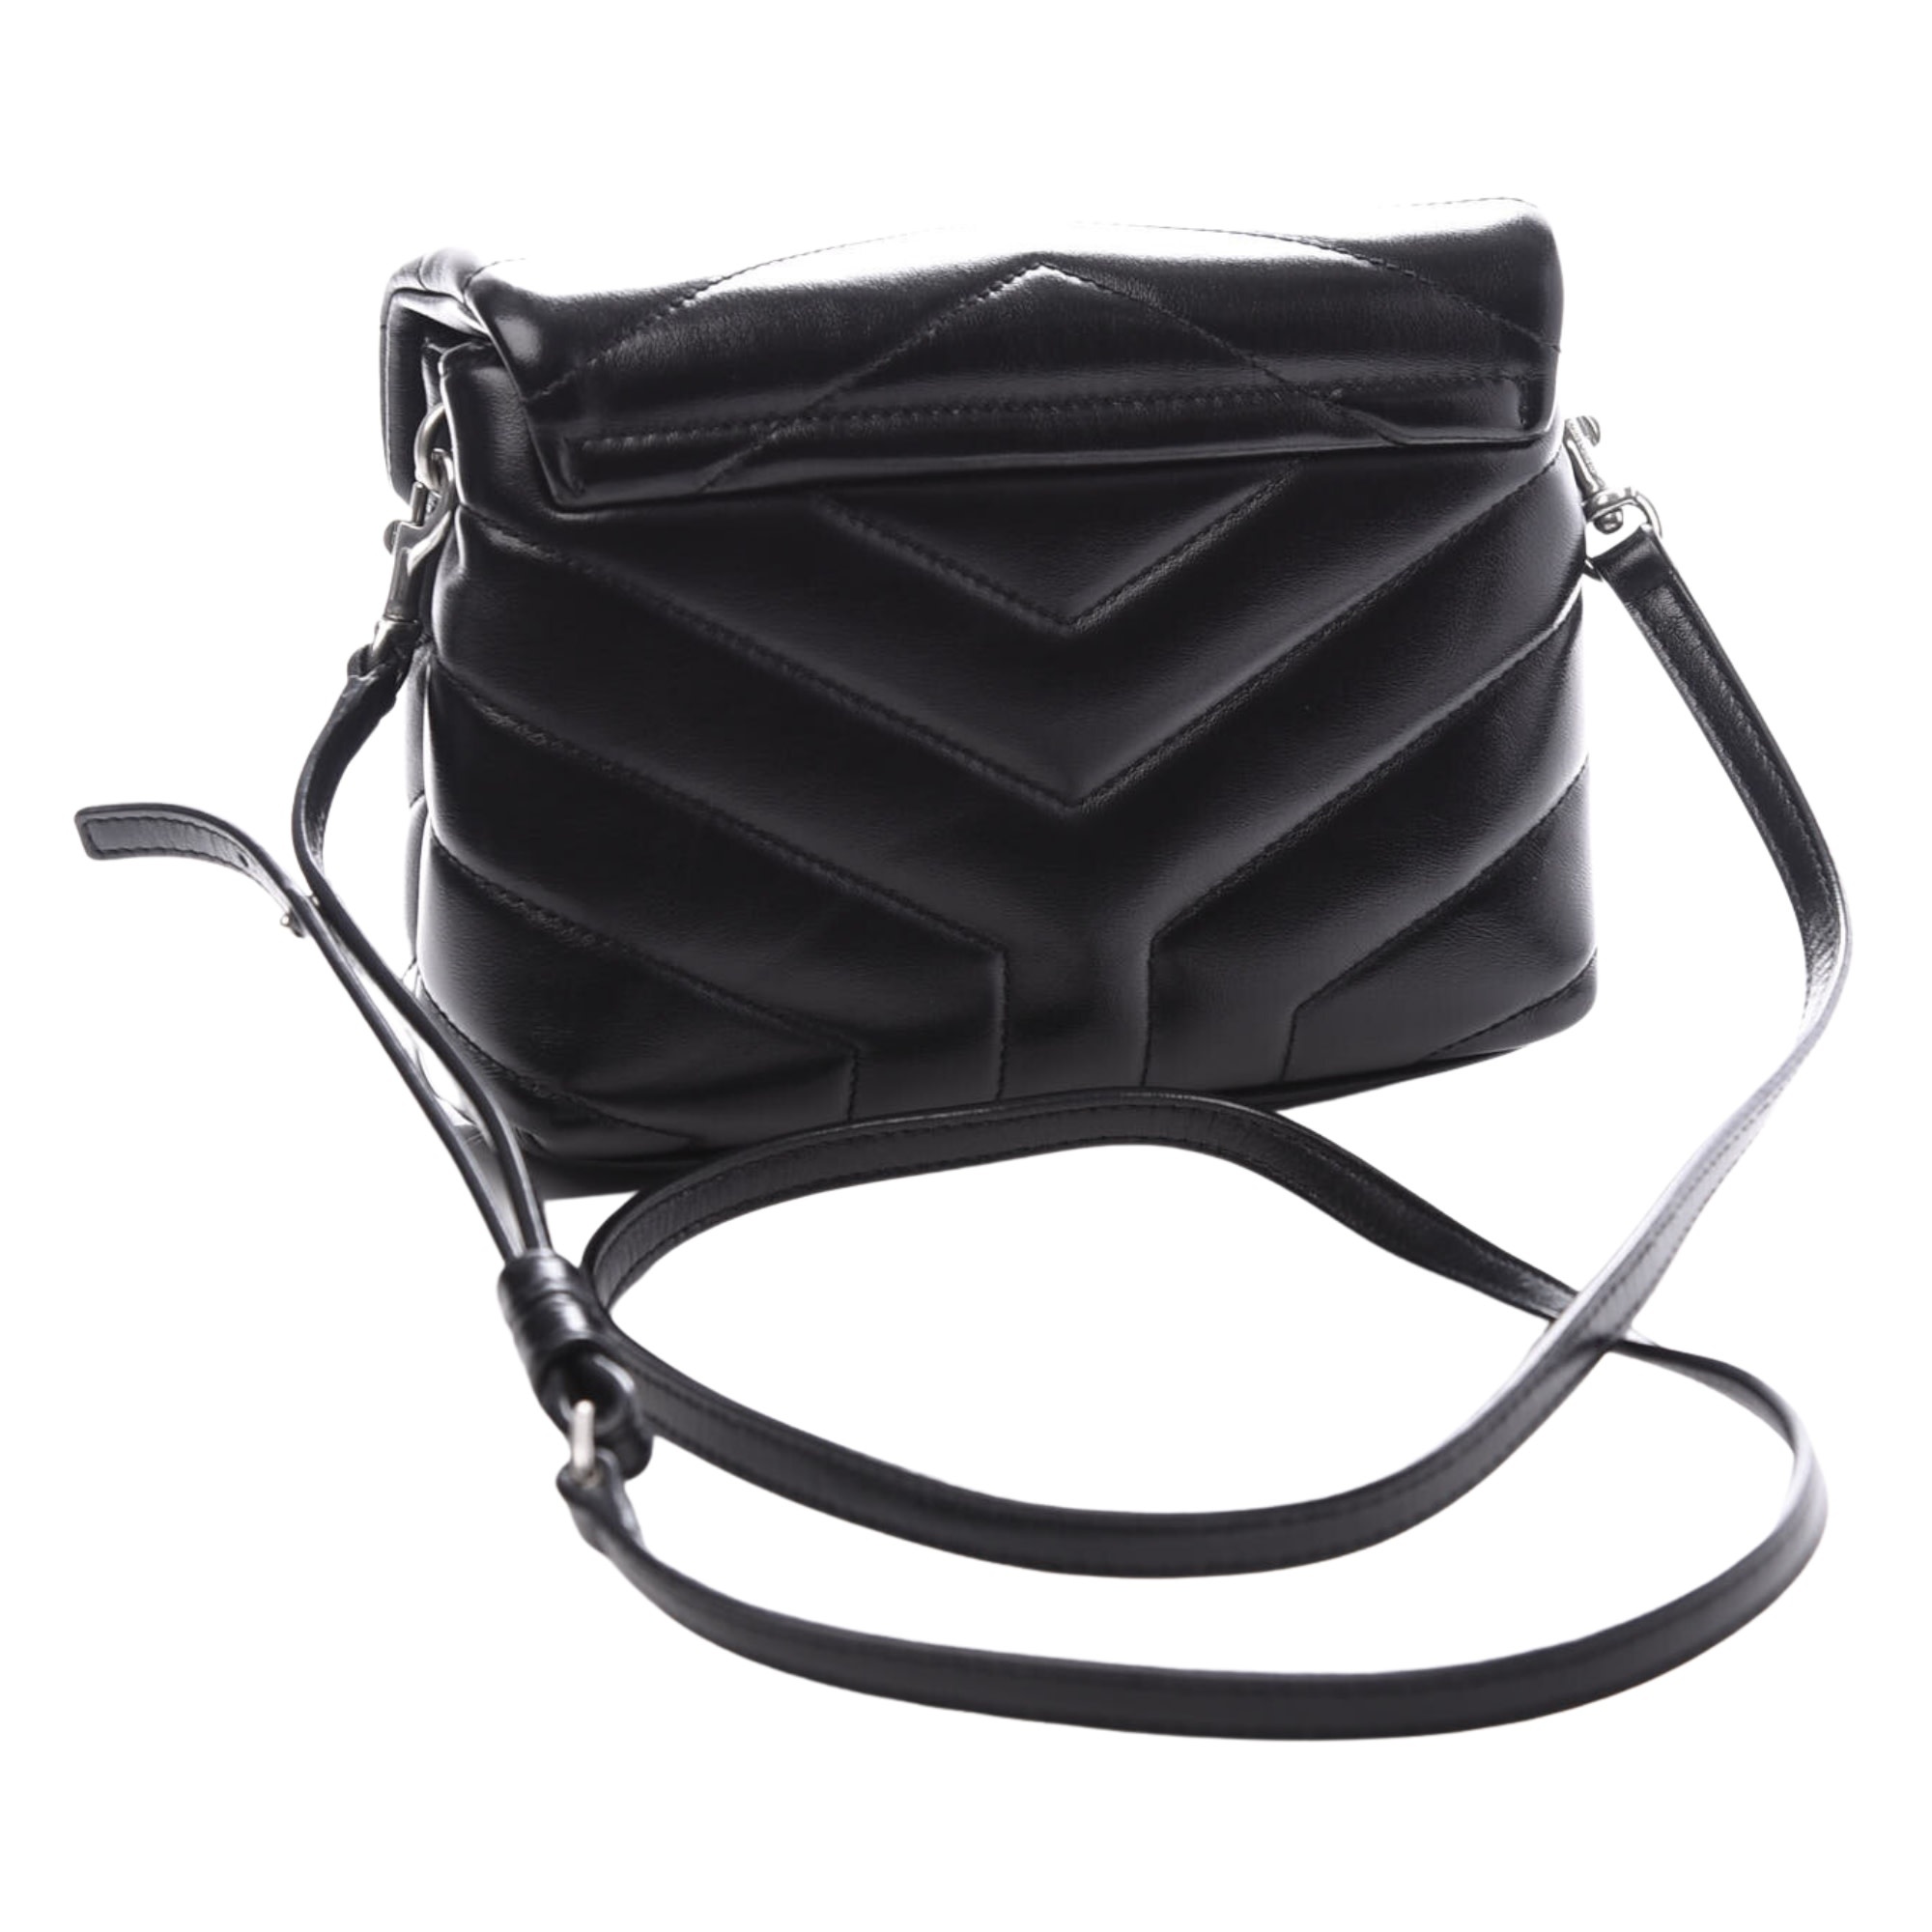 Michael Kors | Bags | Michael Kors Black Pebbled Leather Crossbody Purse Bag  With Silver Hardware | Poshmark